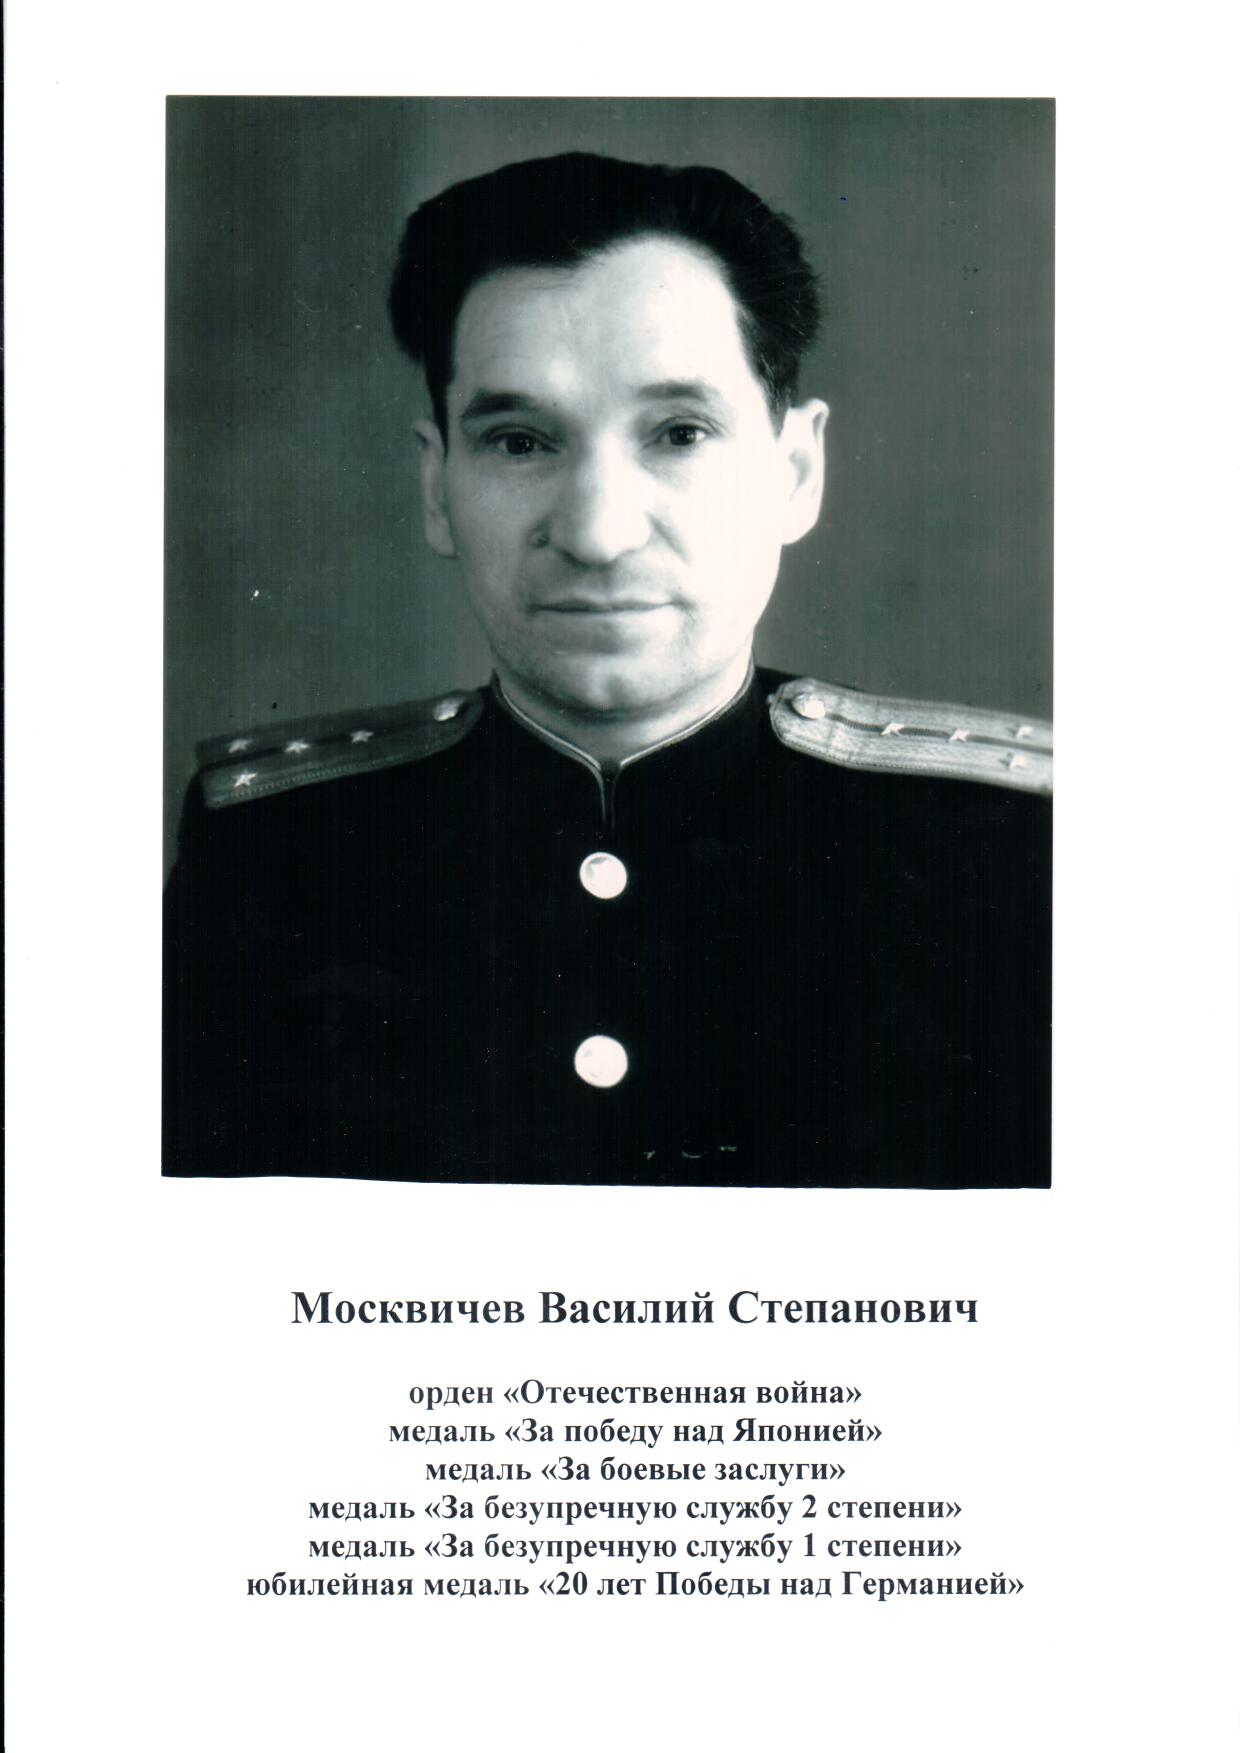 Moskvuchev